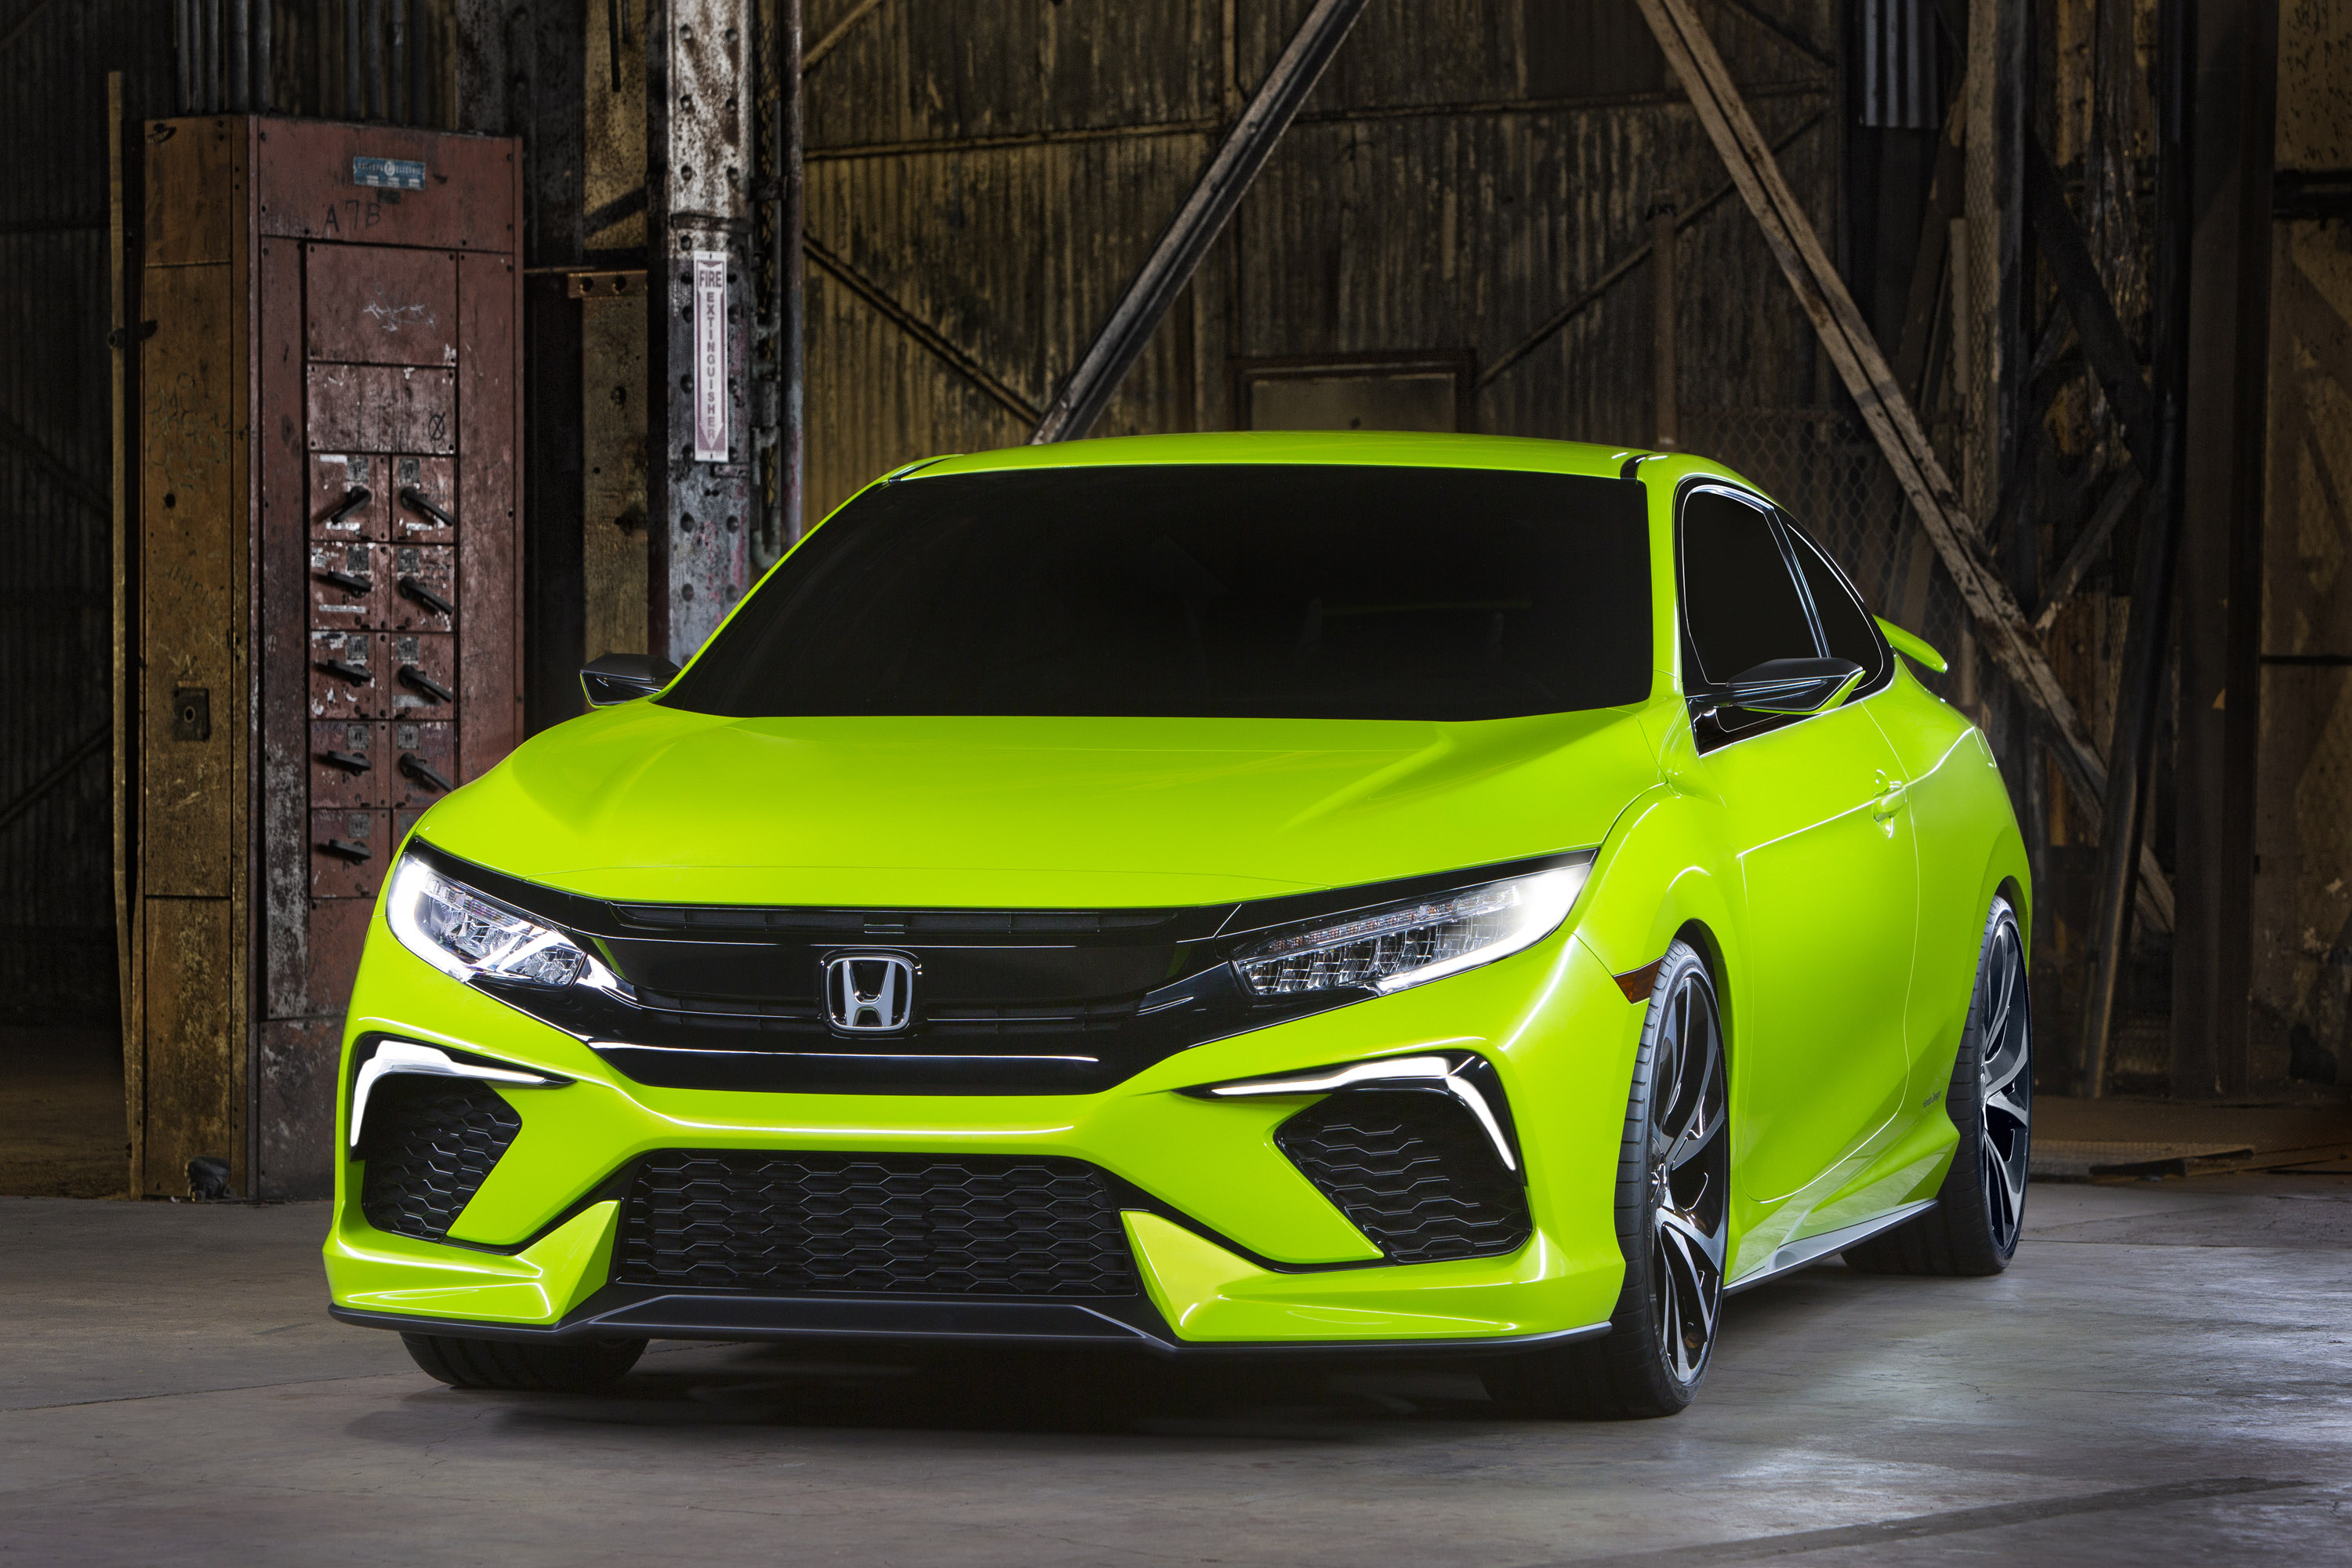 2015 Honda Civic Concept - HD Pictures @ carsinvasion.com